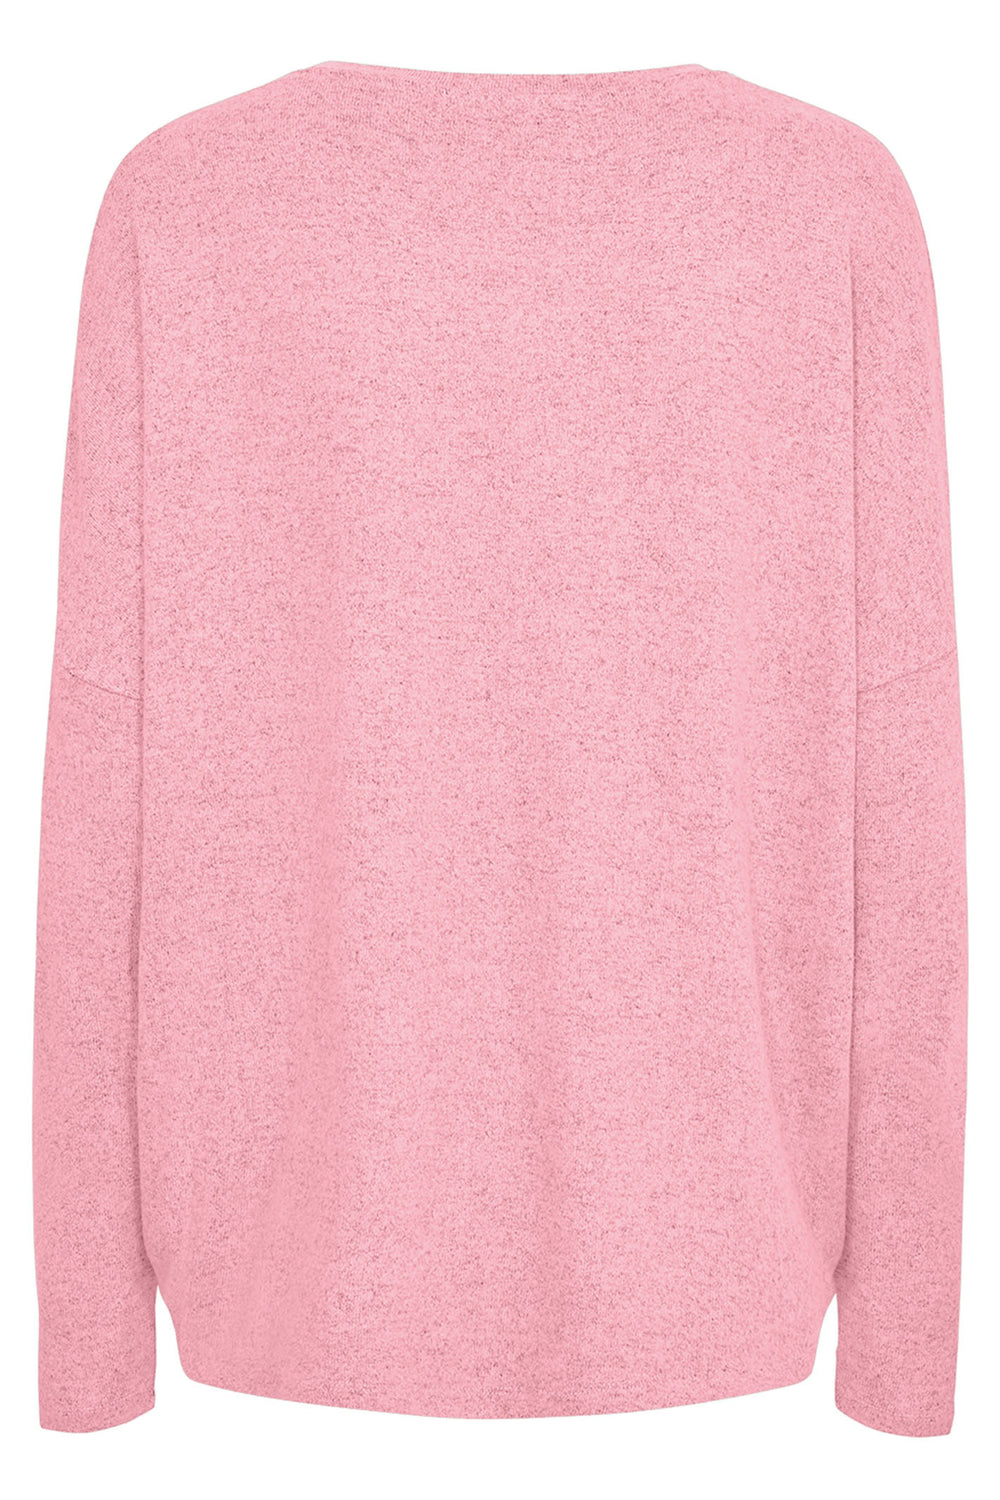 Soya Concept 24788-20 94615-1 SC-Biara 1 Pink Long Sleeve Top - Dotique